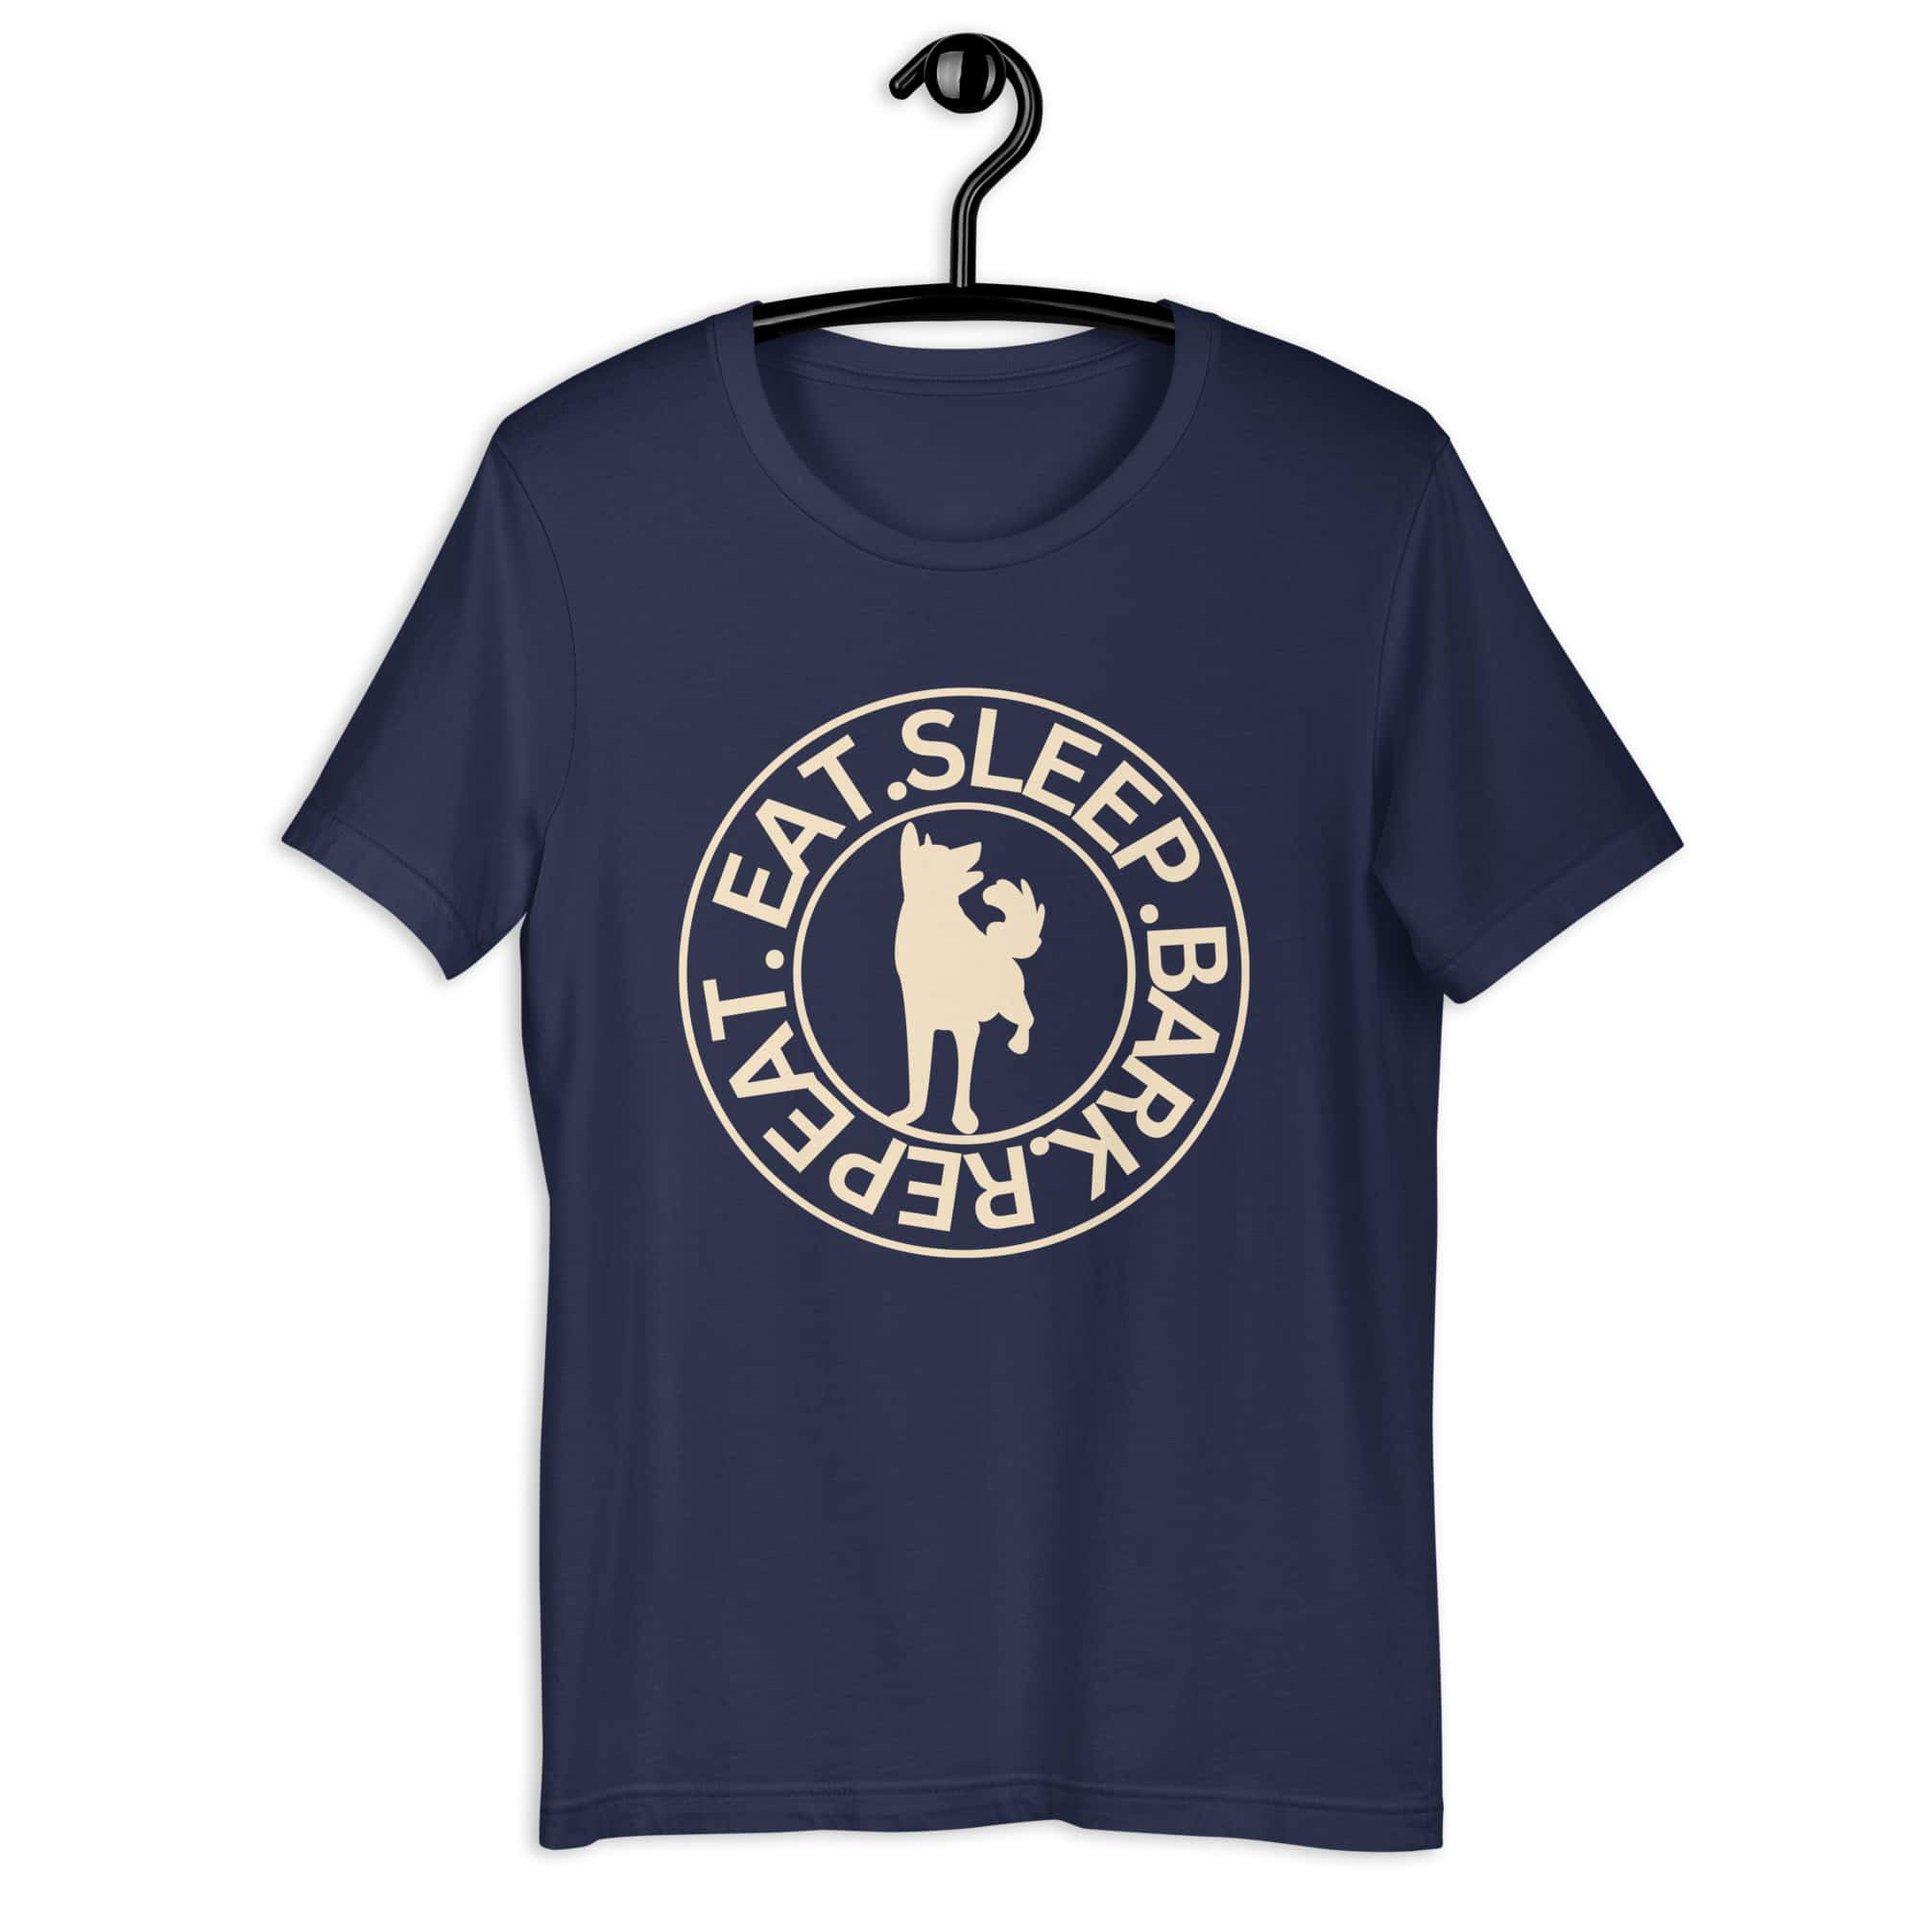 Eat Sleep Bark Repeat Shepherd Unisex T-Shirt. Navy